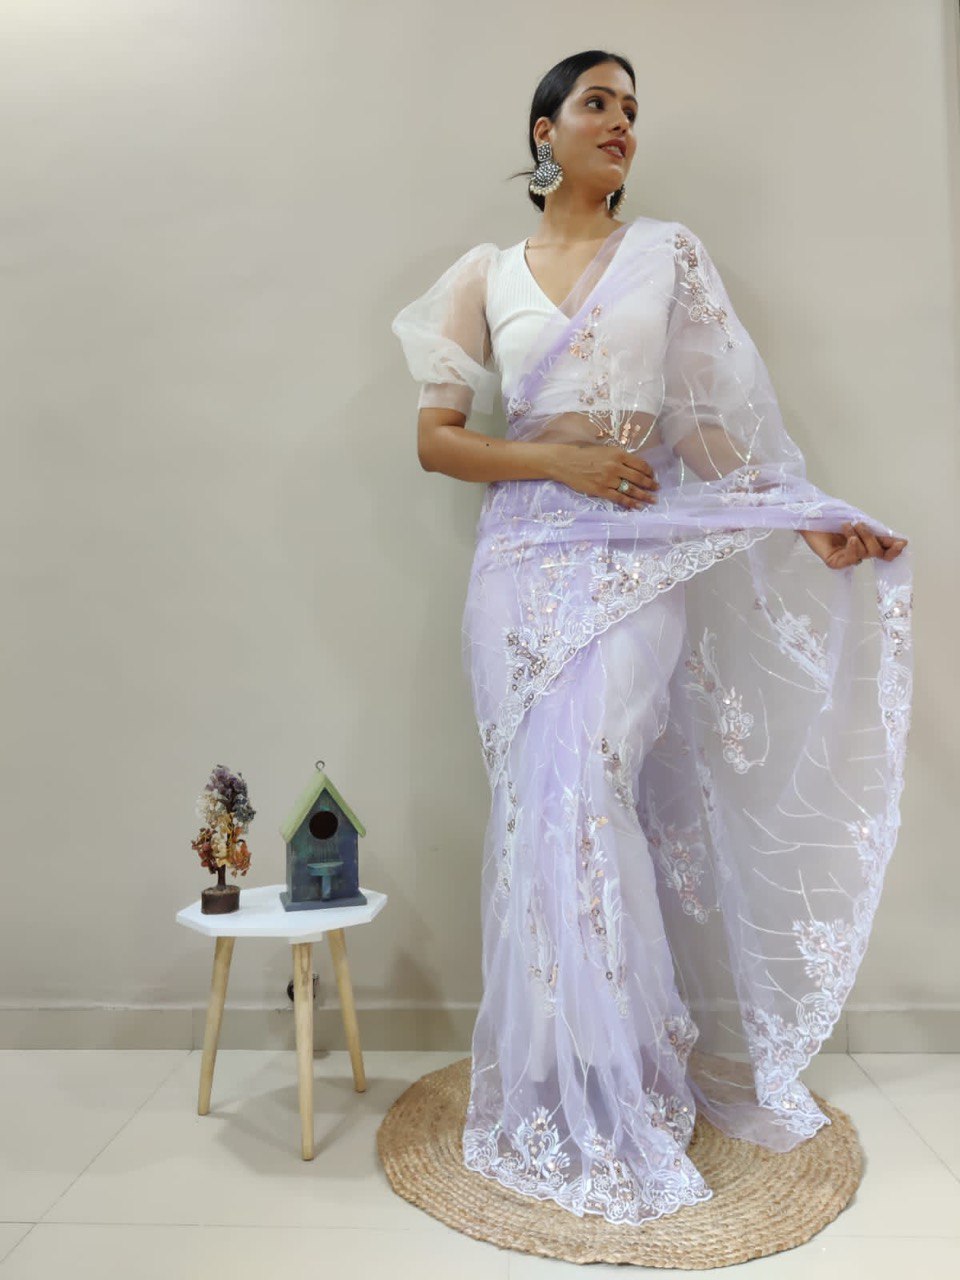 Light purple silk party wear saree 21306